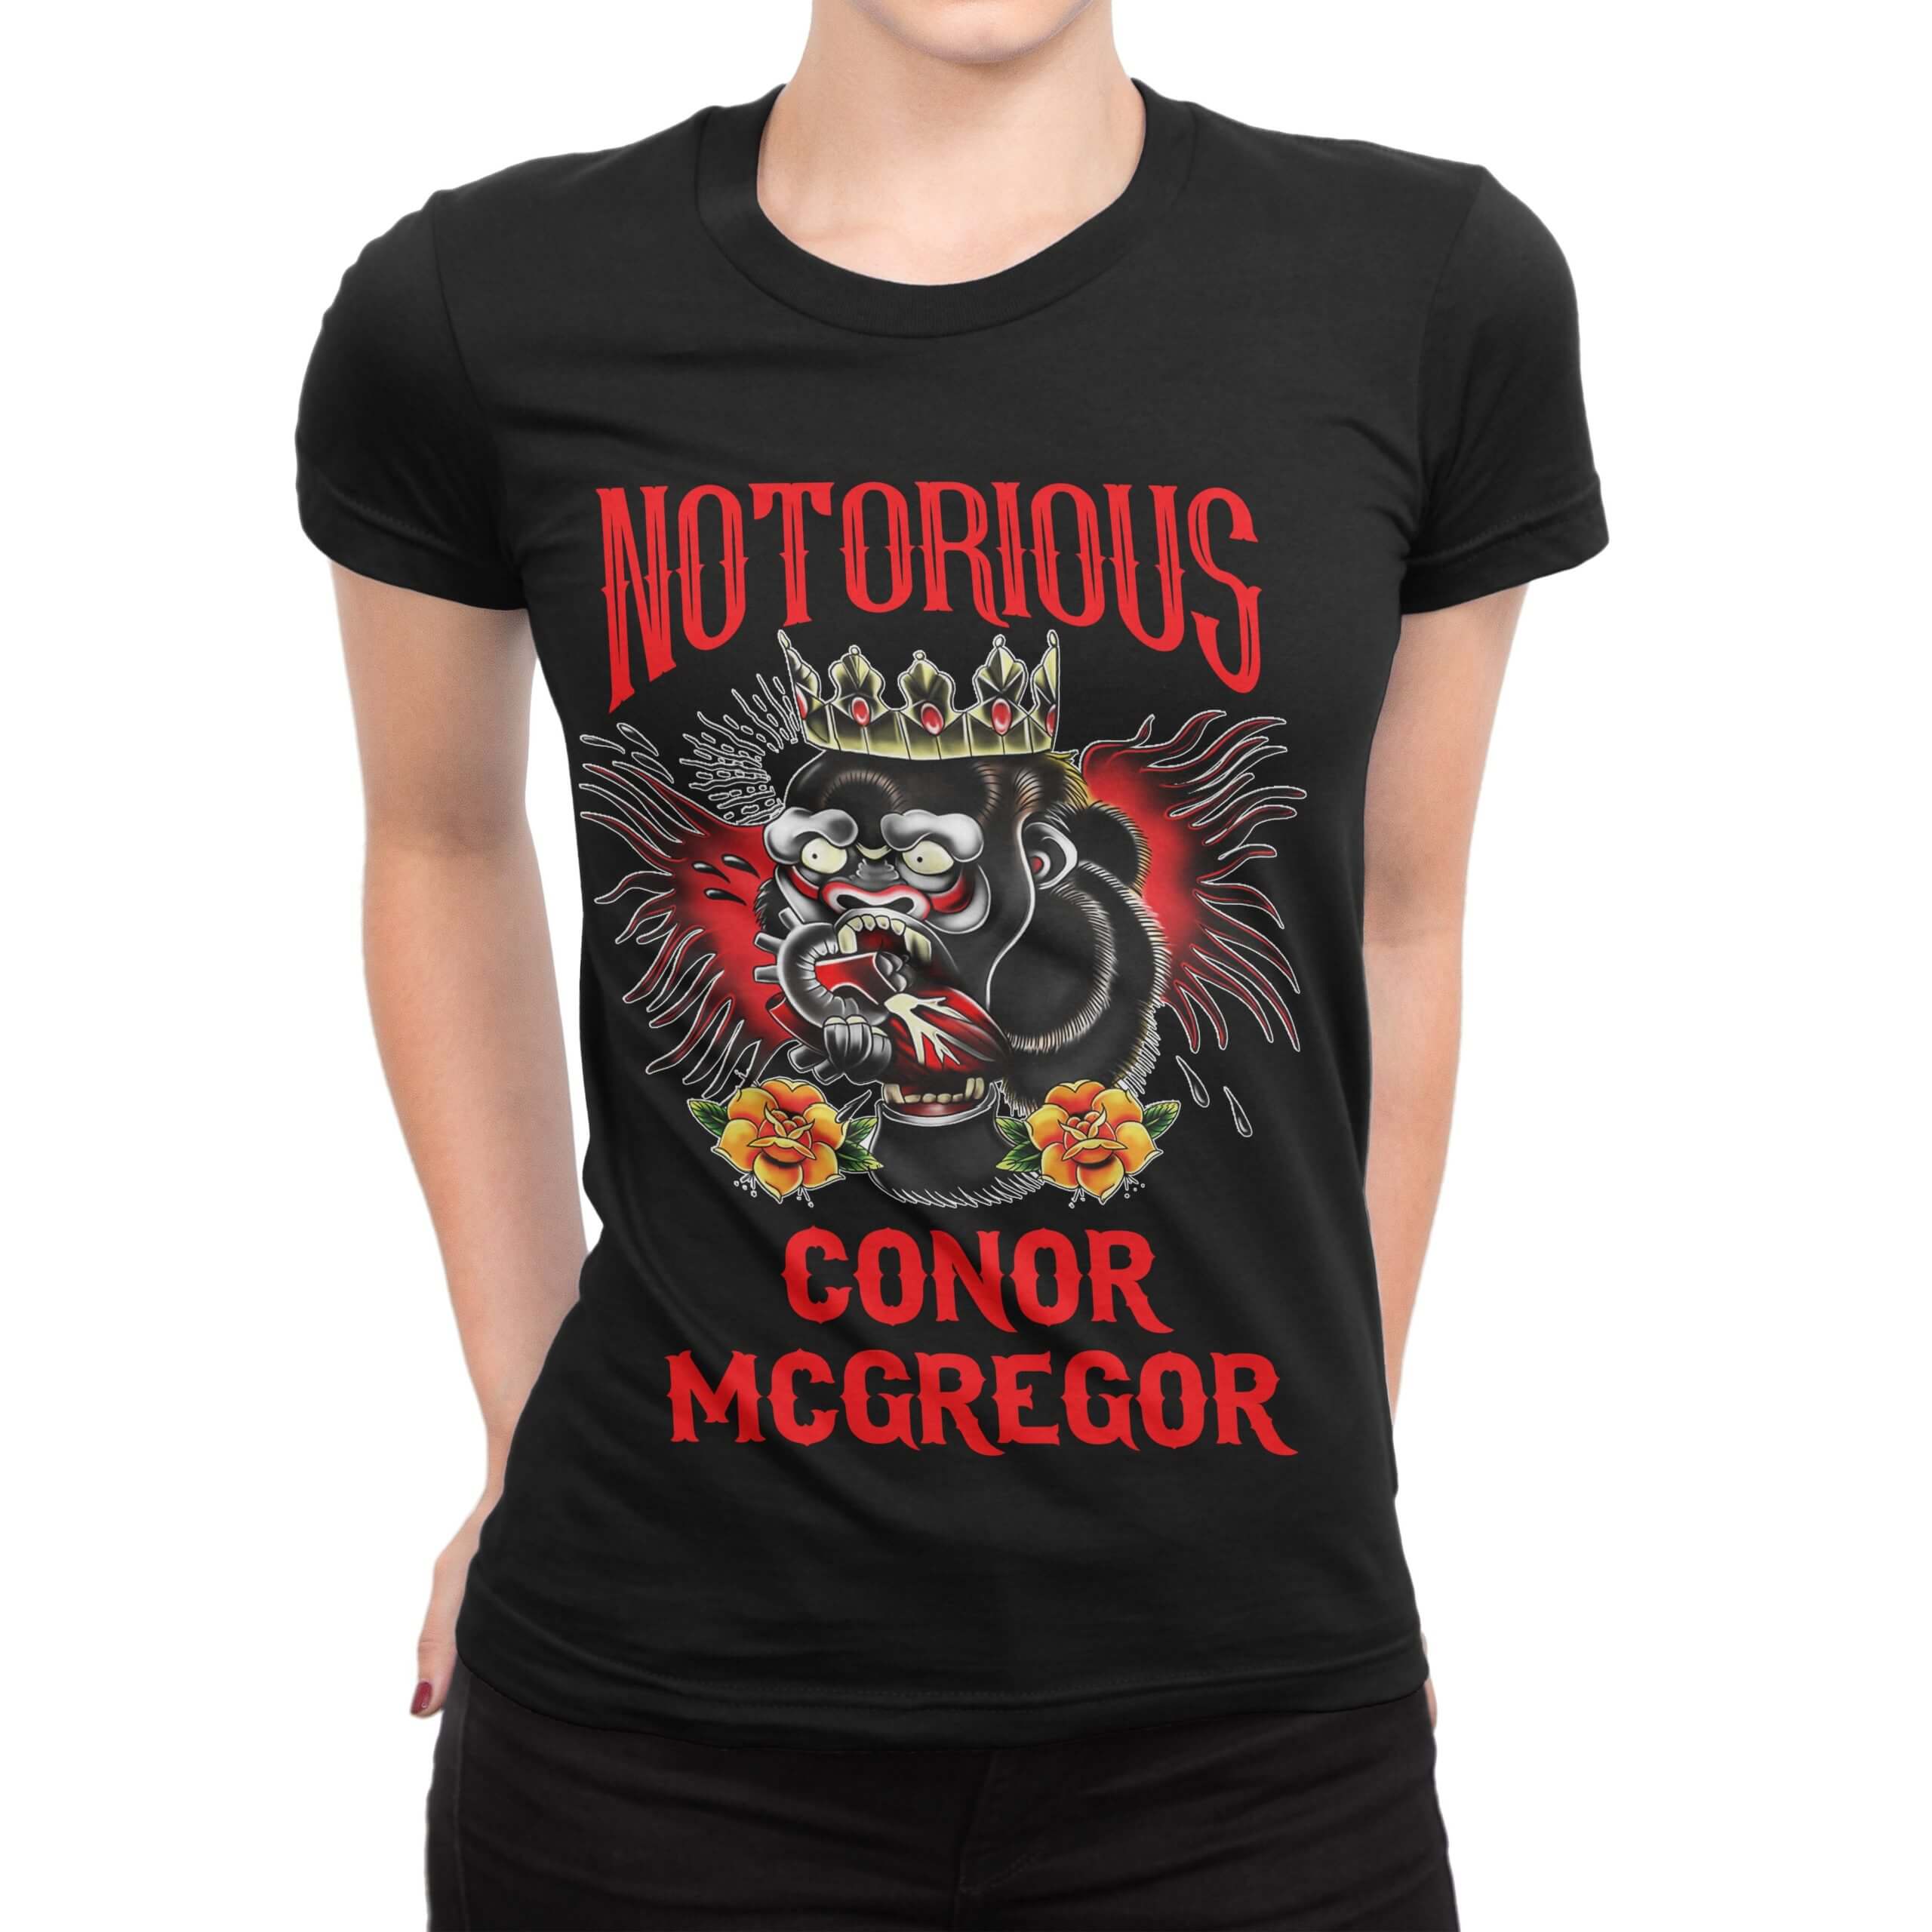 conor mcgregor tattoo t shirt